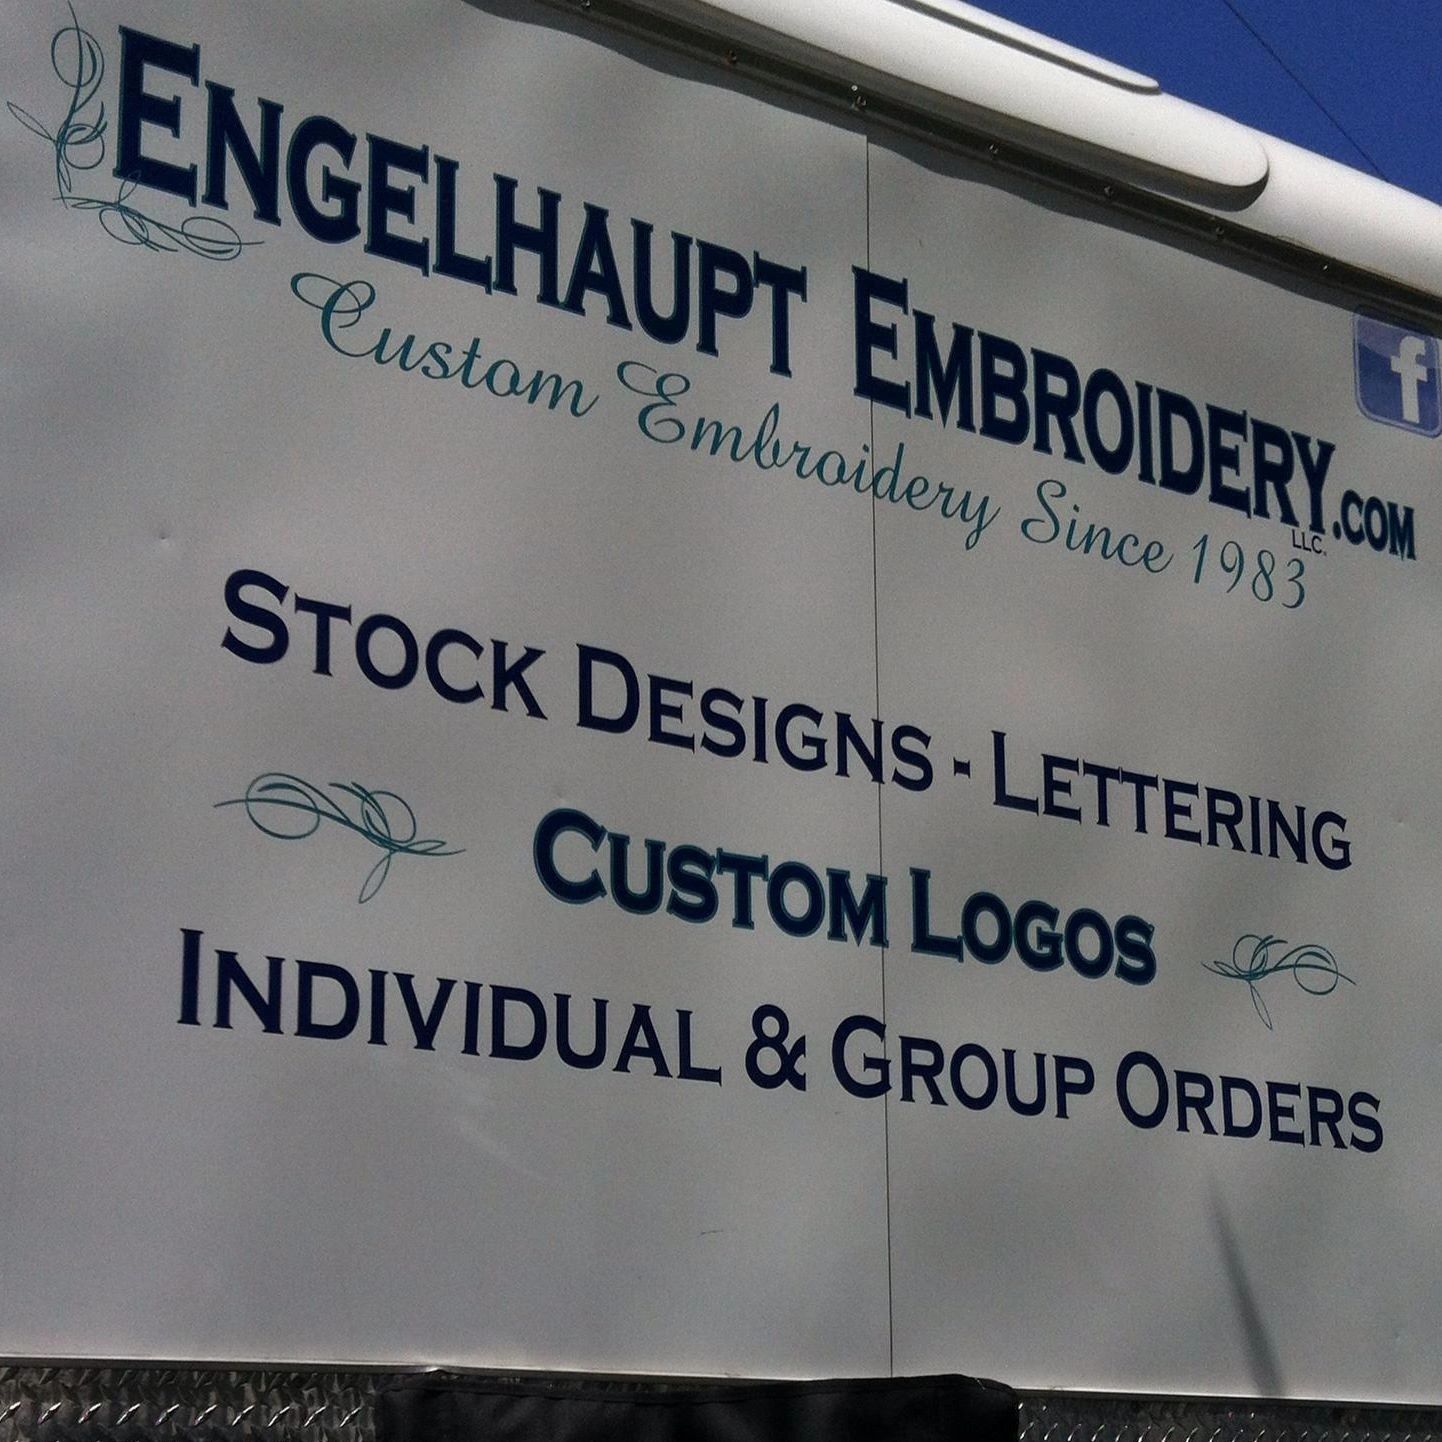 Engelhaupt Embroidery